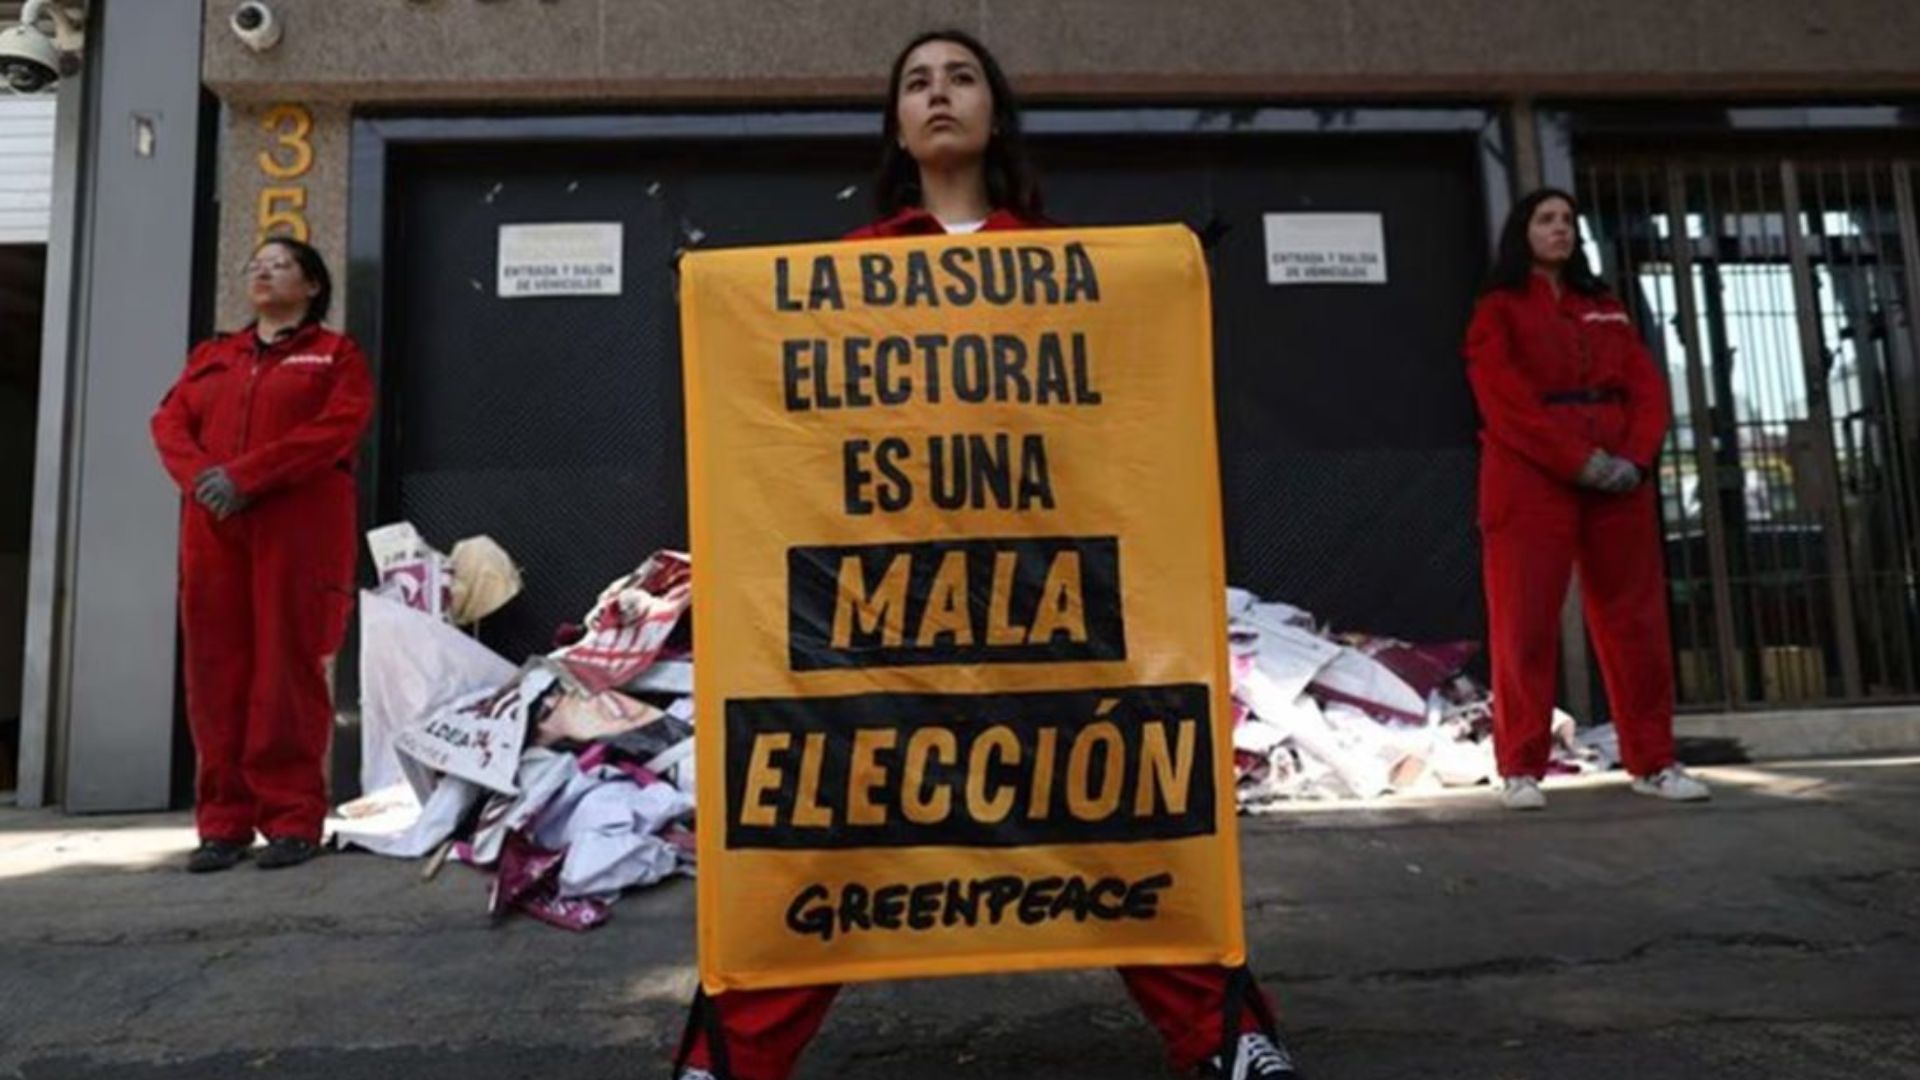 Llamado de Greenpeace México sobre la Basura Electoral